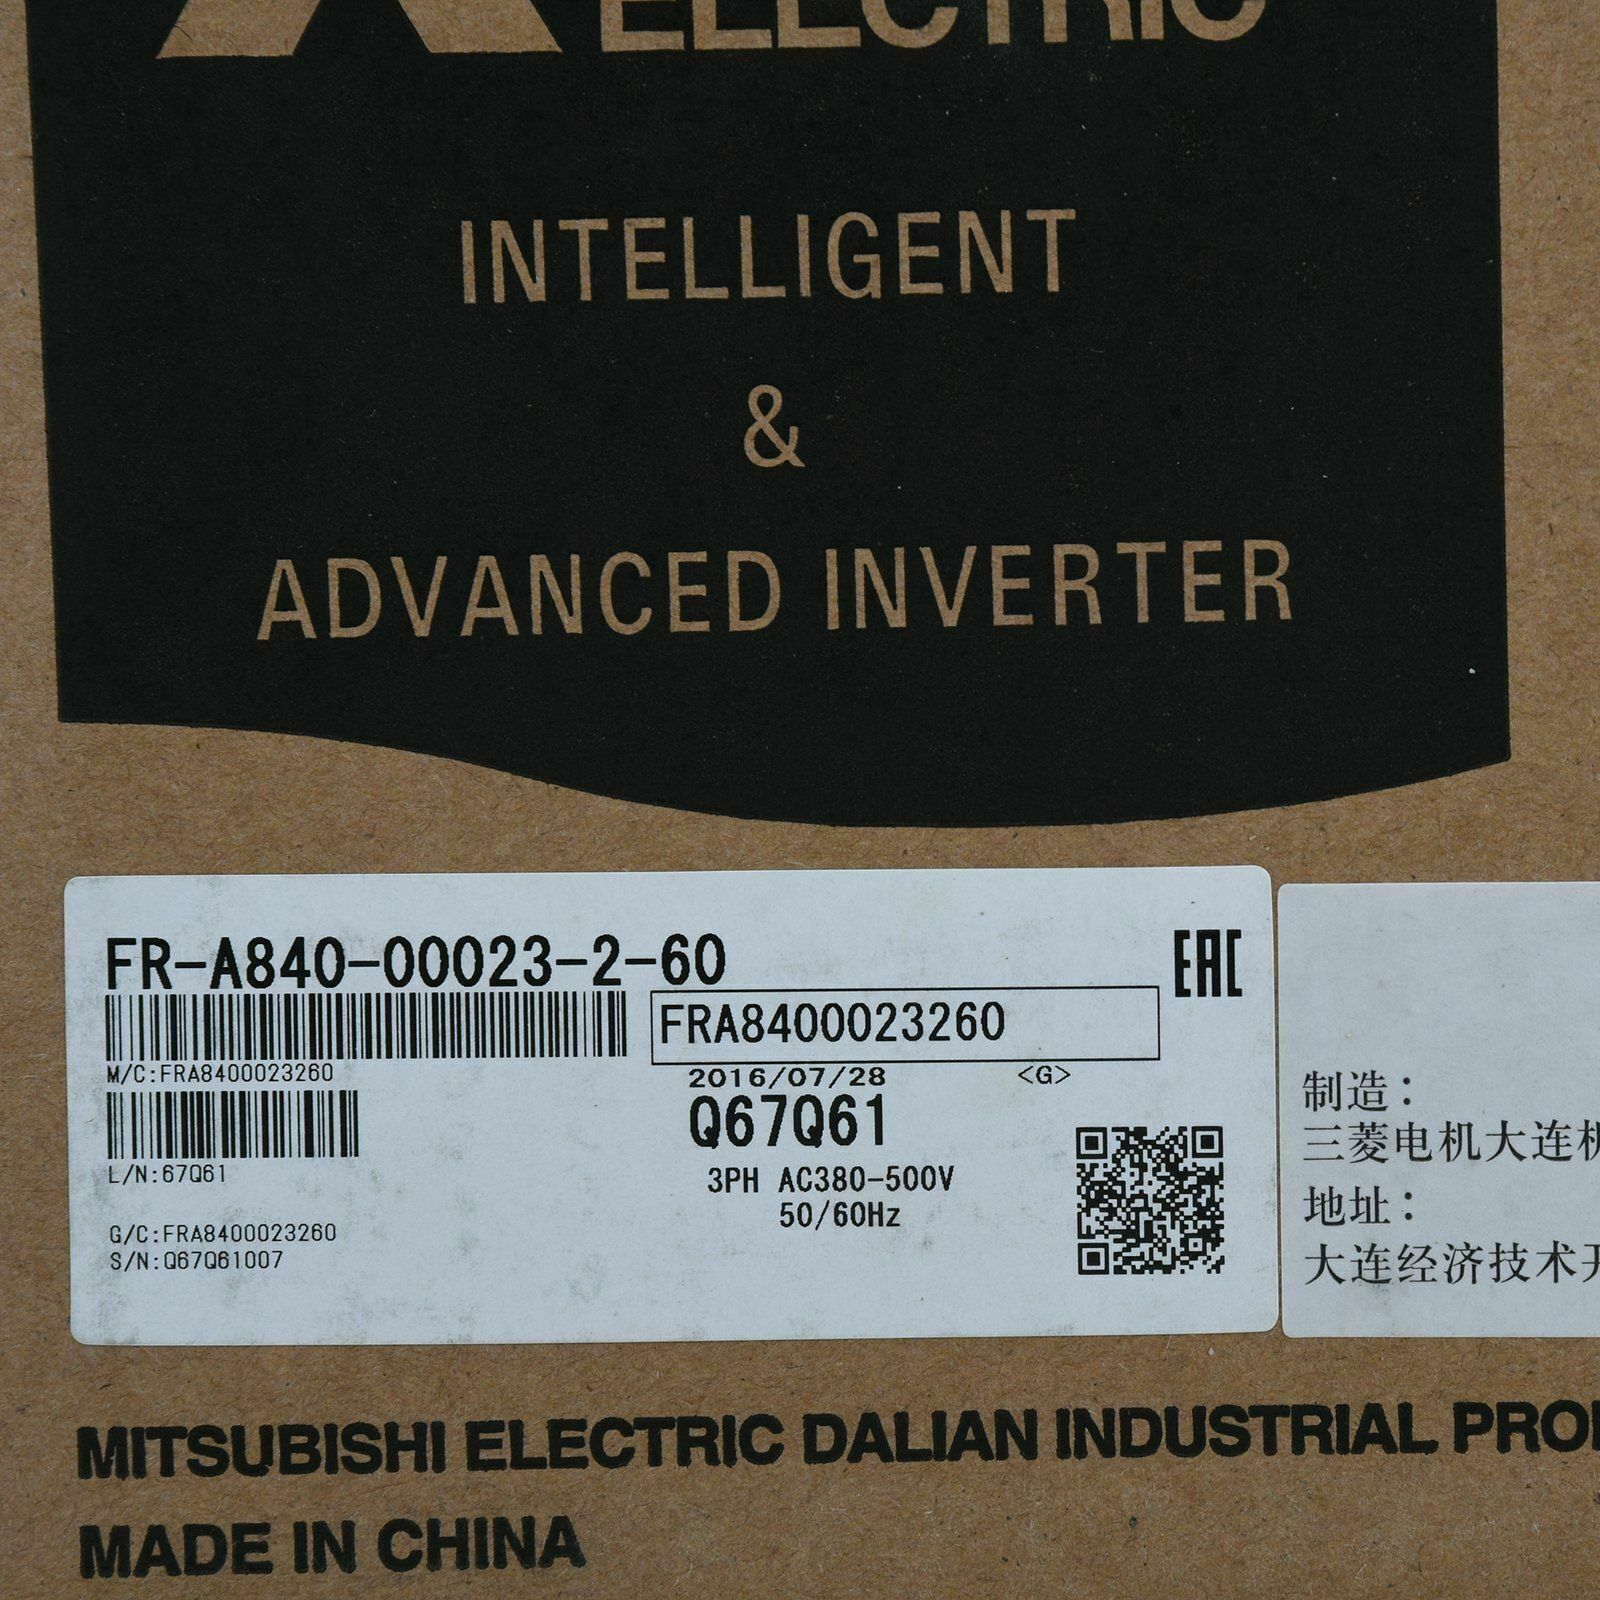 NEW MITSUBISHI Inverter FR-A840-00023-2-60 MITSUBISHI FR-A840-00023-2-60